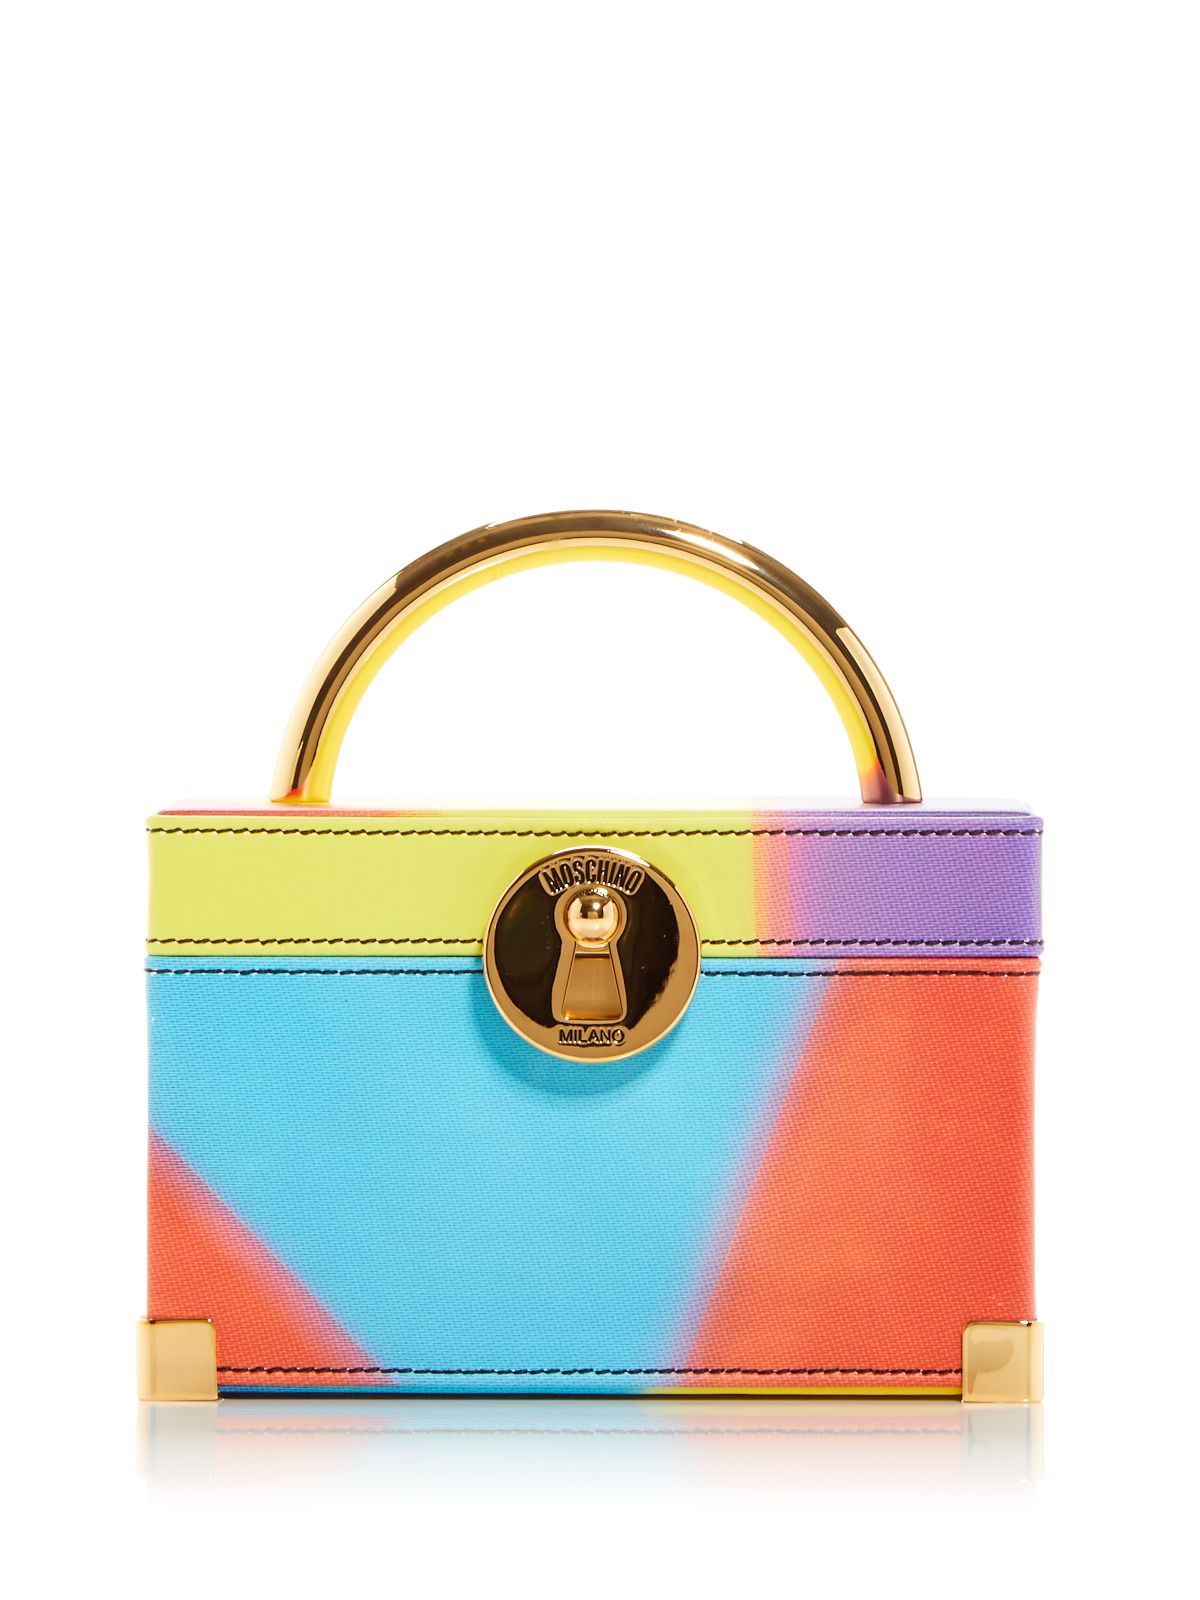 MOSCHINO Women's Yellow Color Block Top Handle Strap Handbag Purse